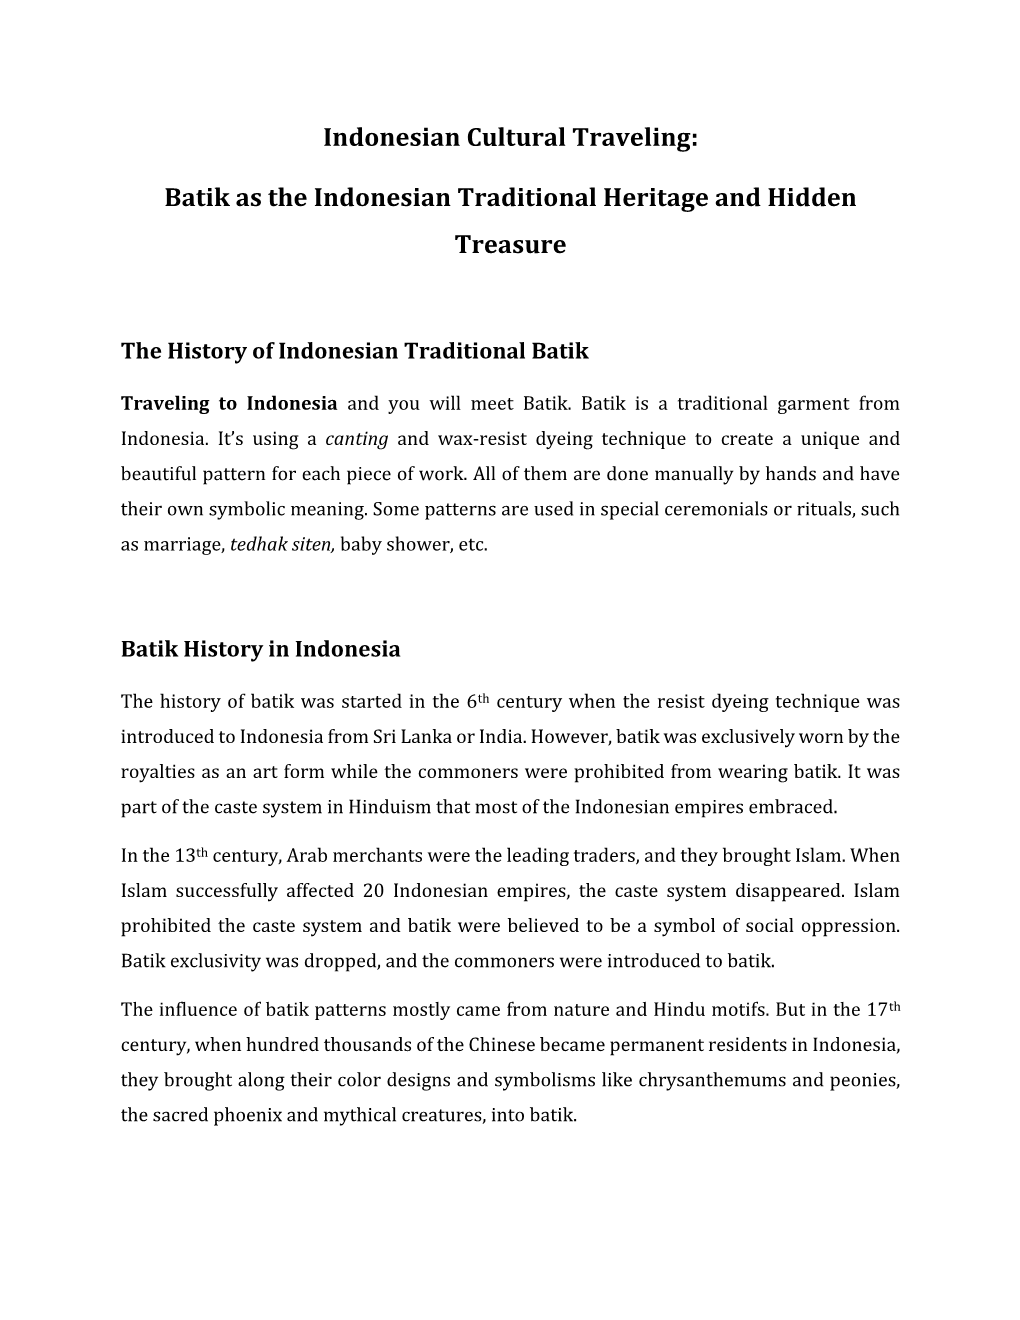 Indonesian Cultural Traveling: Batik As the Indonesian